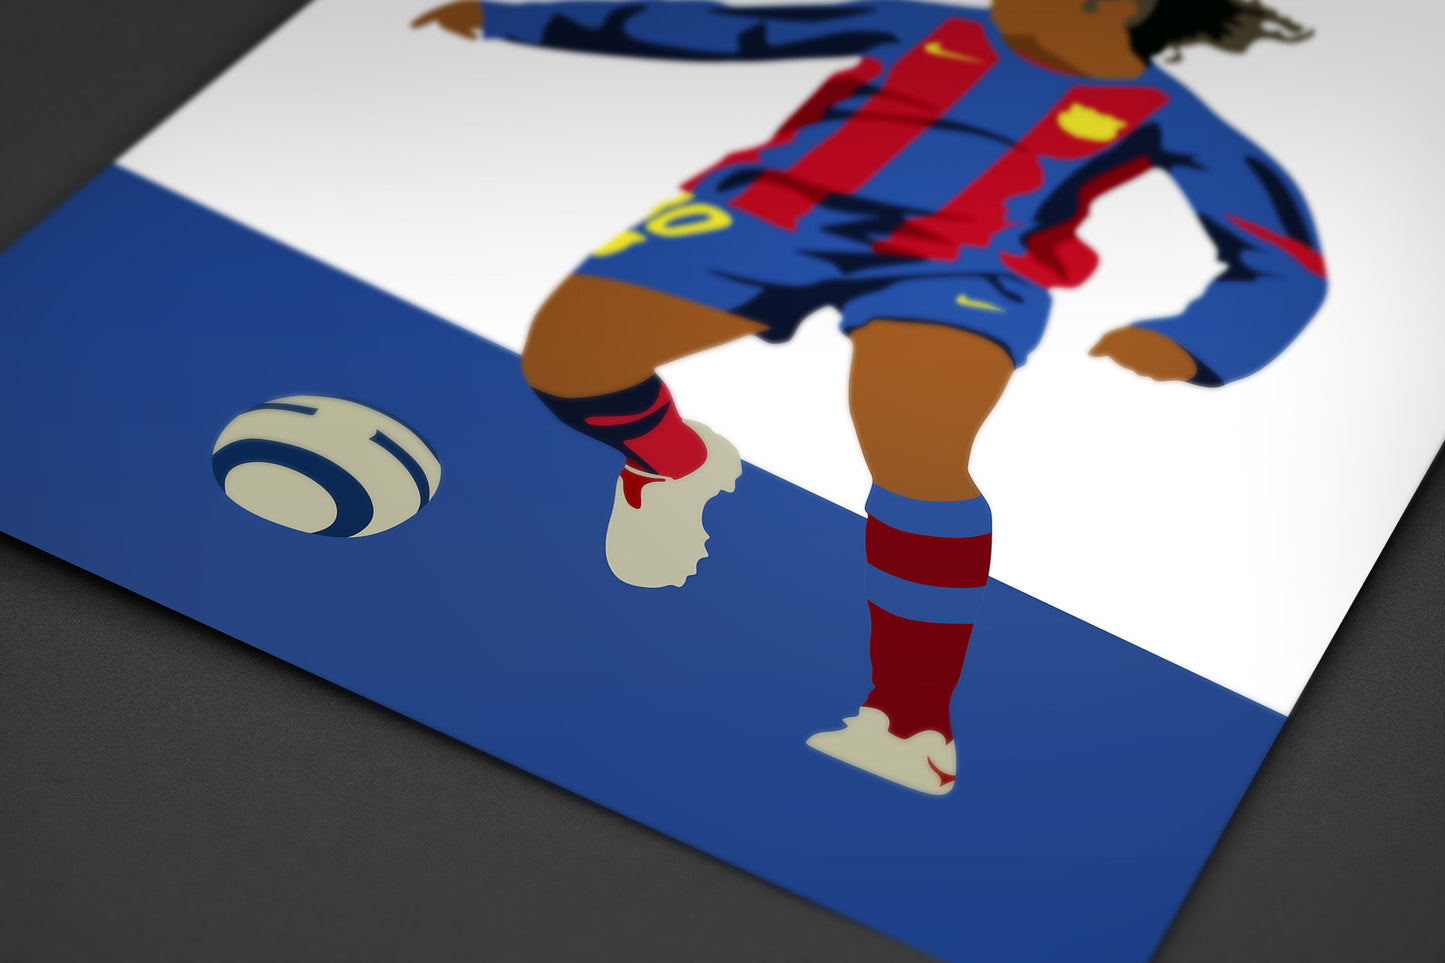 Classic Ronaldinho Football Print \ Minimalist Art Print Poster Gift Idea For Him \ Soccer \ Gift for Husband Boyfriend